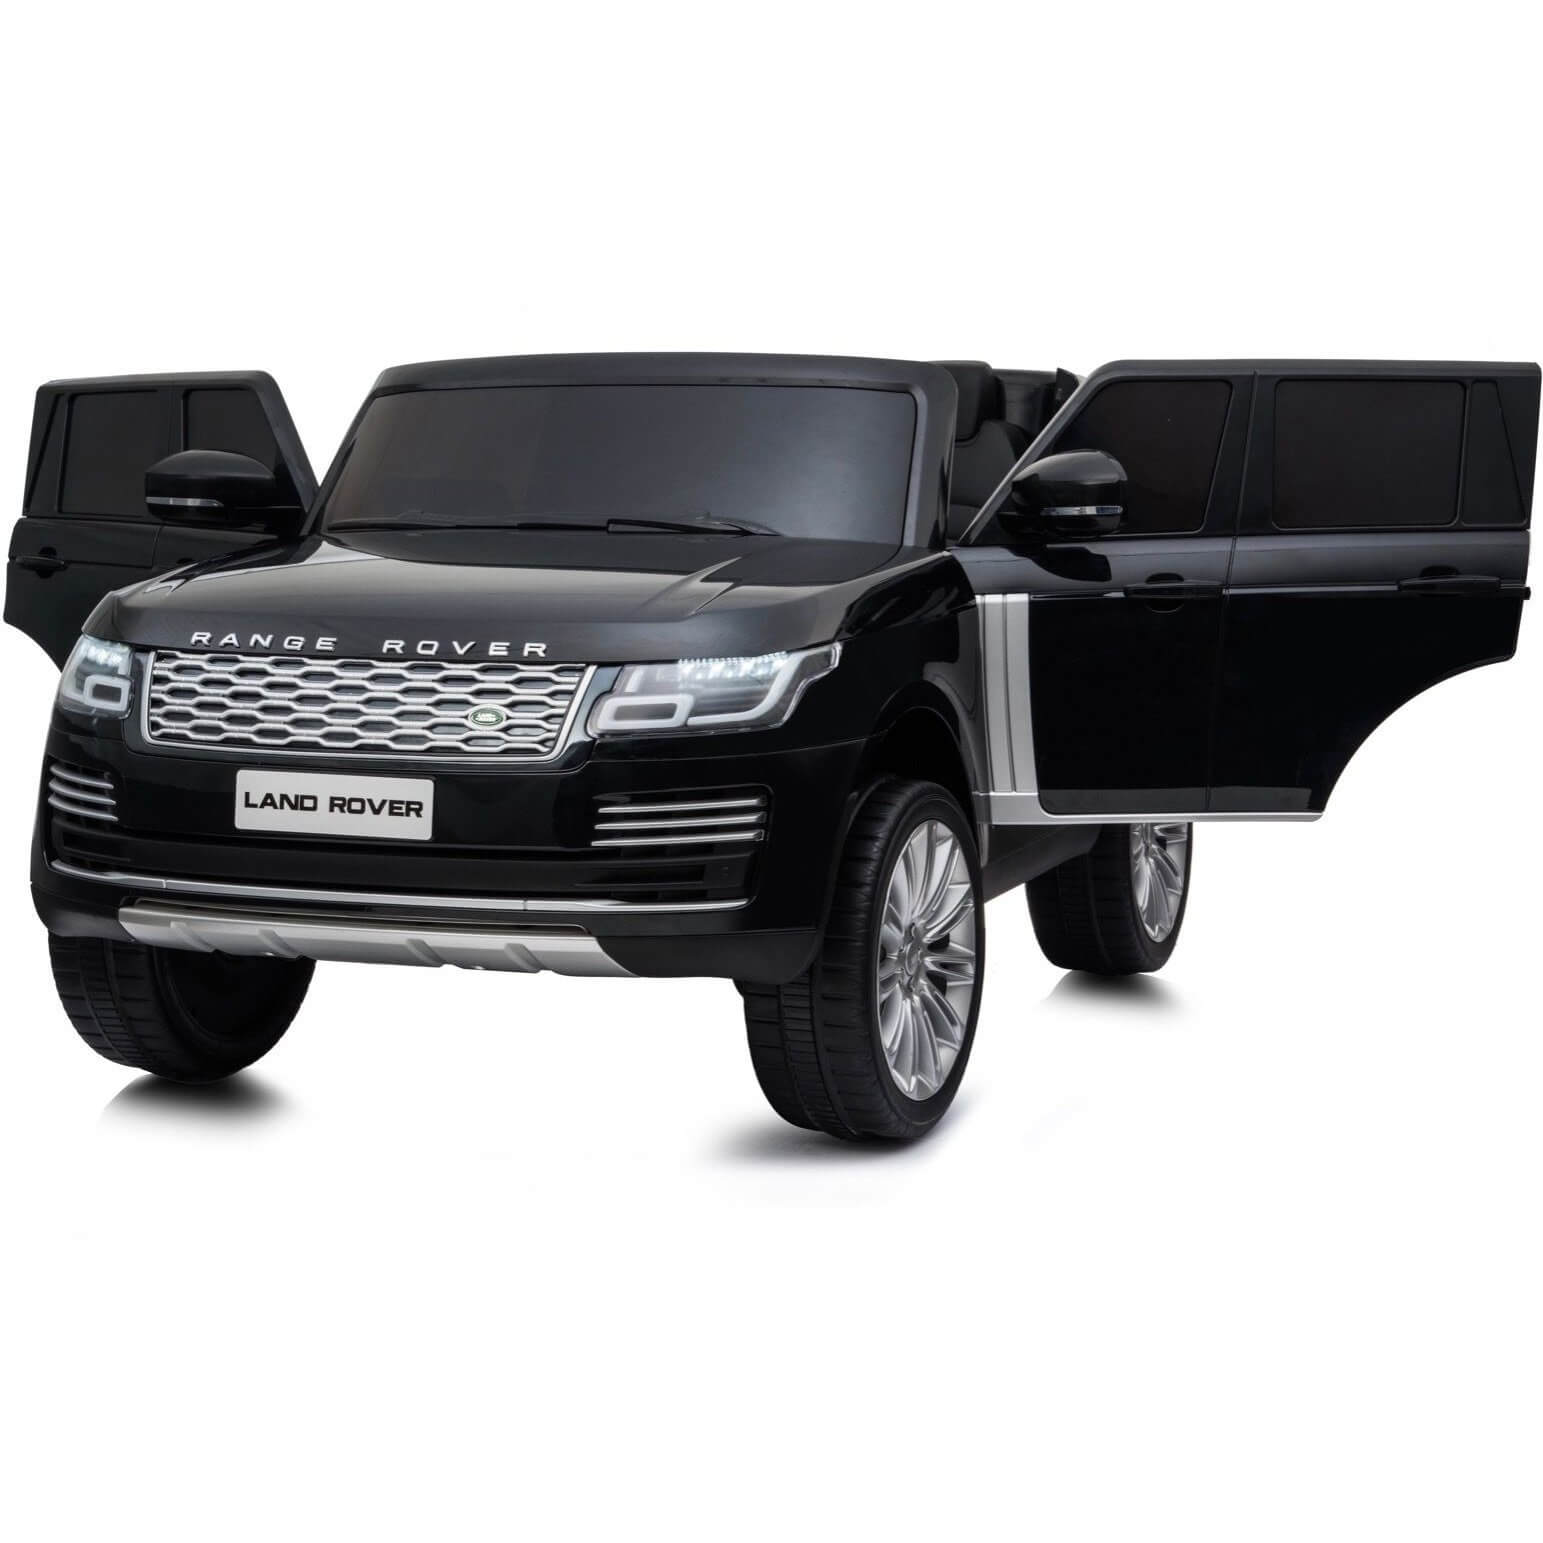 Black 24 v Premium Range Rover Vogue Two Seater Car for kids